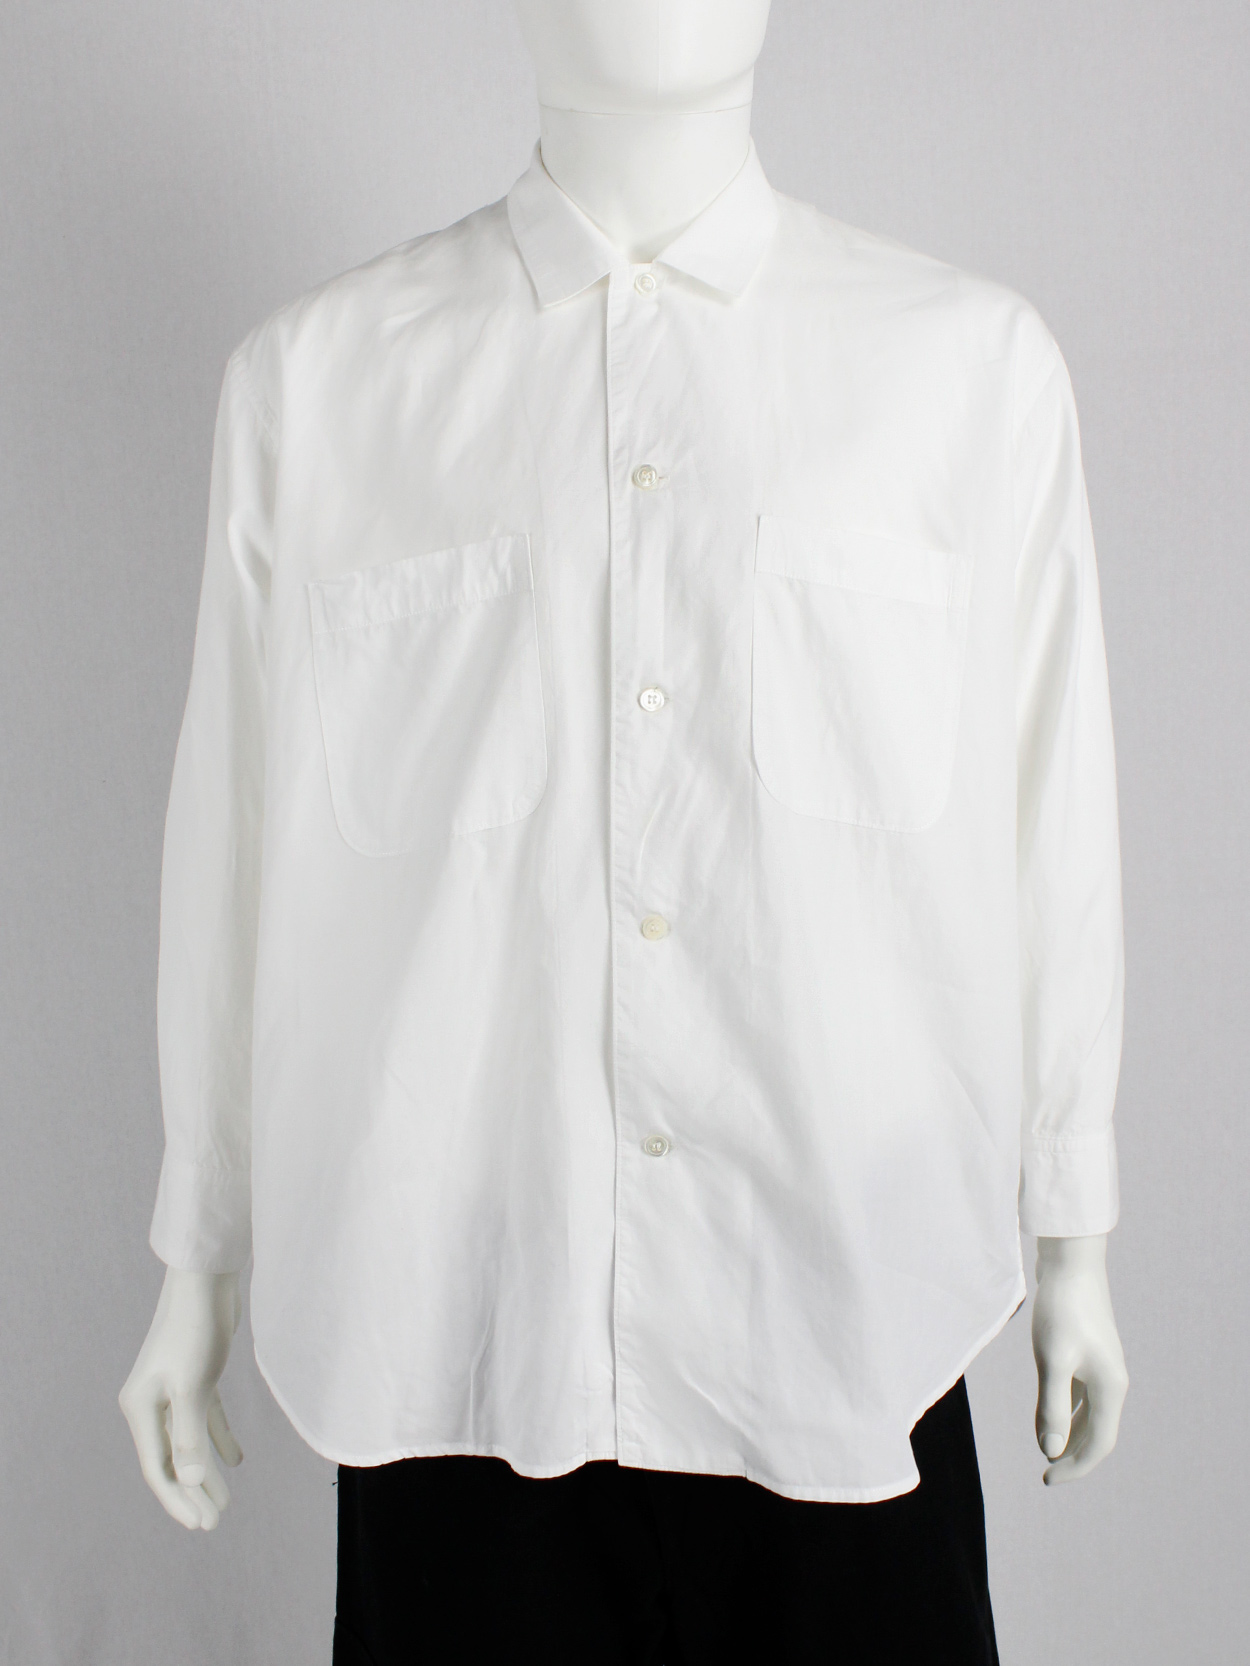 Ys Yohji Yamamoto men white oversized with lapel collar 1980s 80s (1)